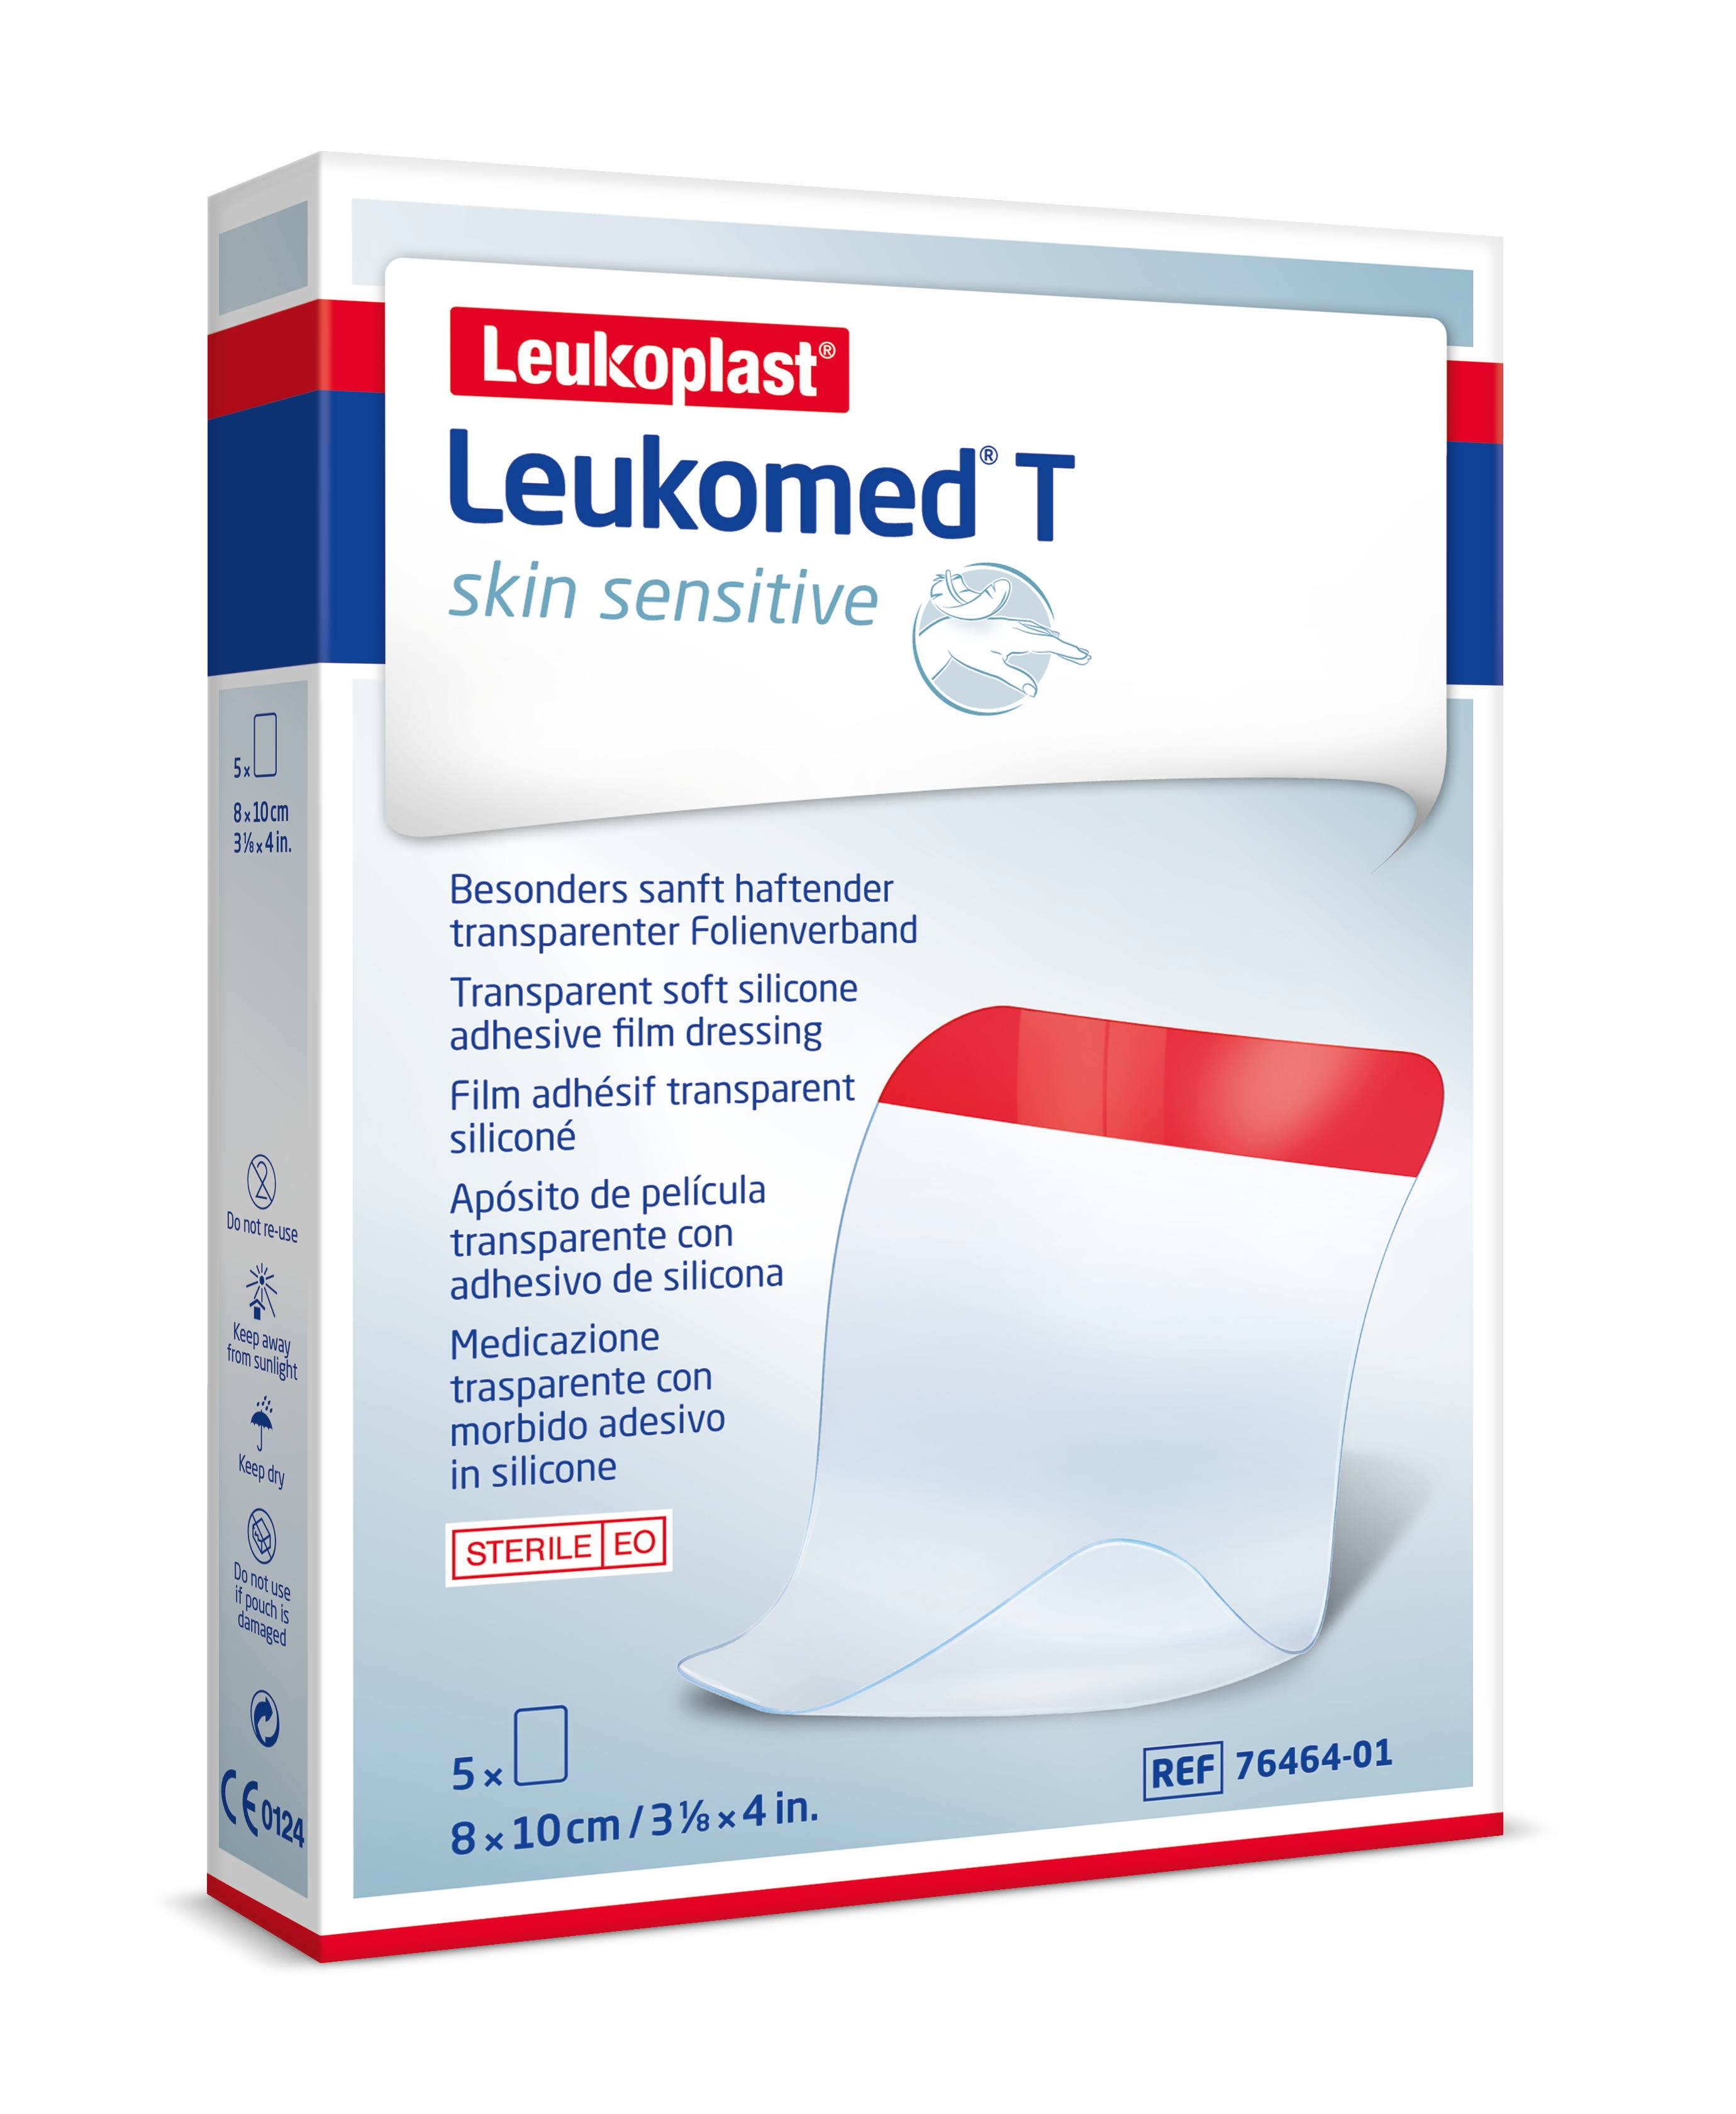 Leukomed T skin sensitive 8x10 cm 5pk